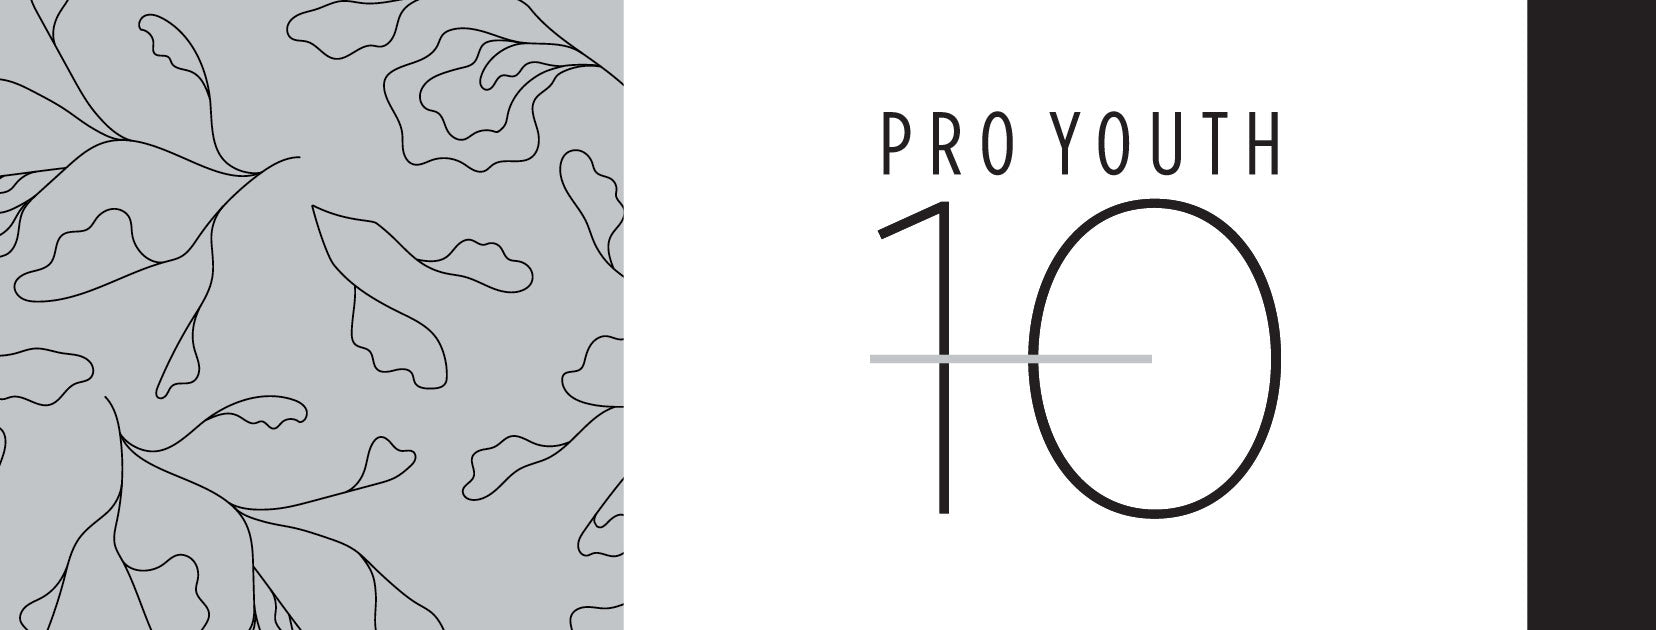 Pro Youth -10 Peptides